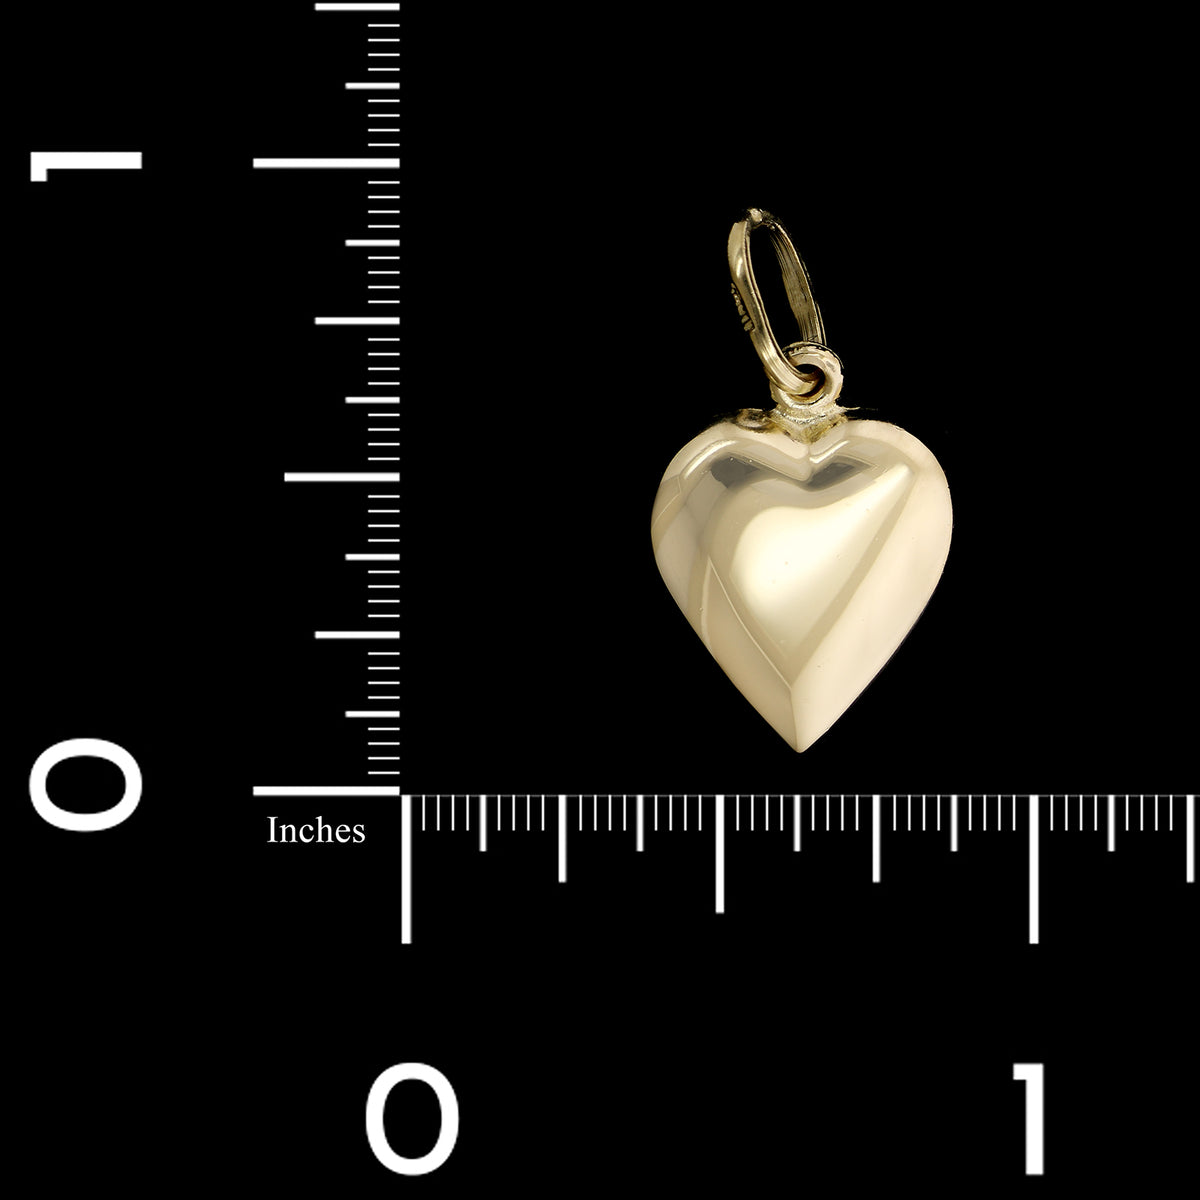 14K Yellow Gold Estate Puffed Heart Charm